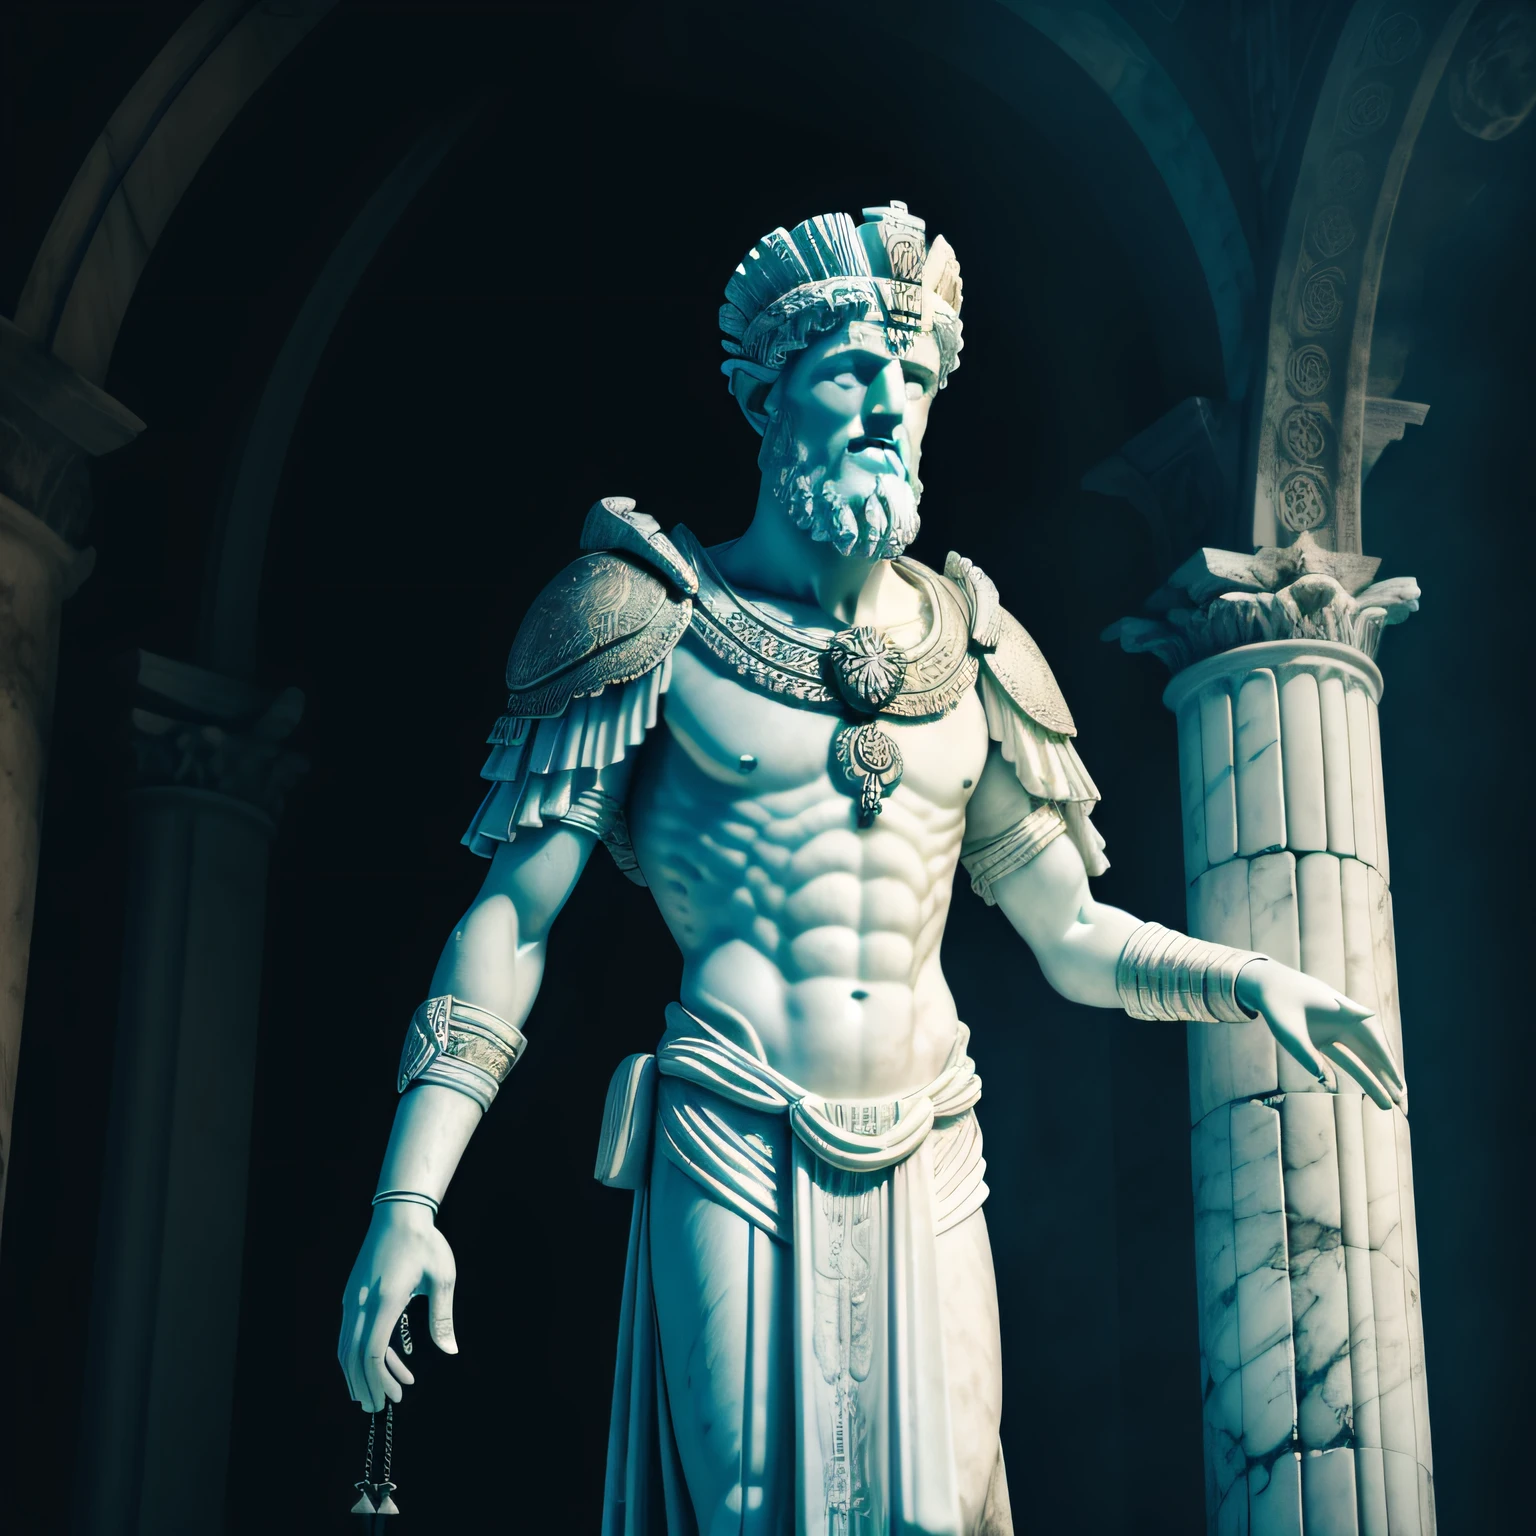 A realistic full-length Greek white marble statue of Marcus Aurelius wearing a ghostly toga, fundo neutro, Moody, , fotorrealista, cinematographic scene, super detalhada, hiper realista, luzes brilhantes, NEON AO FUNDO 8 K